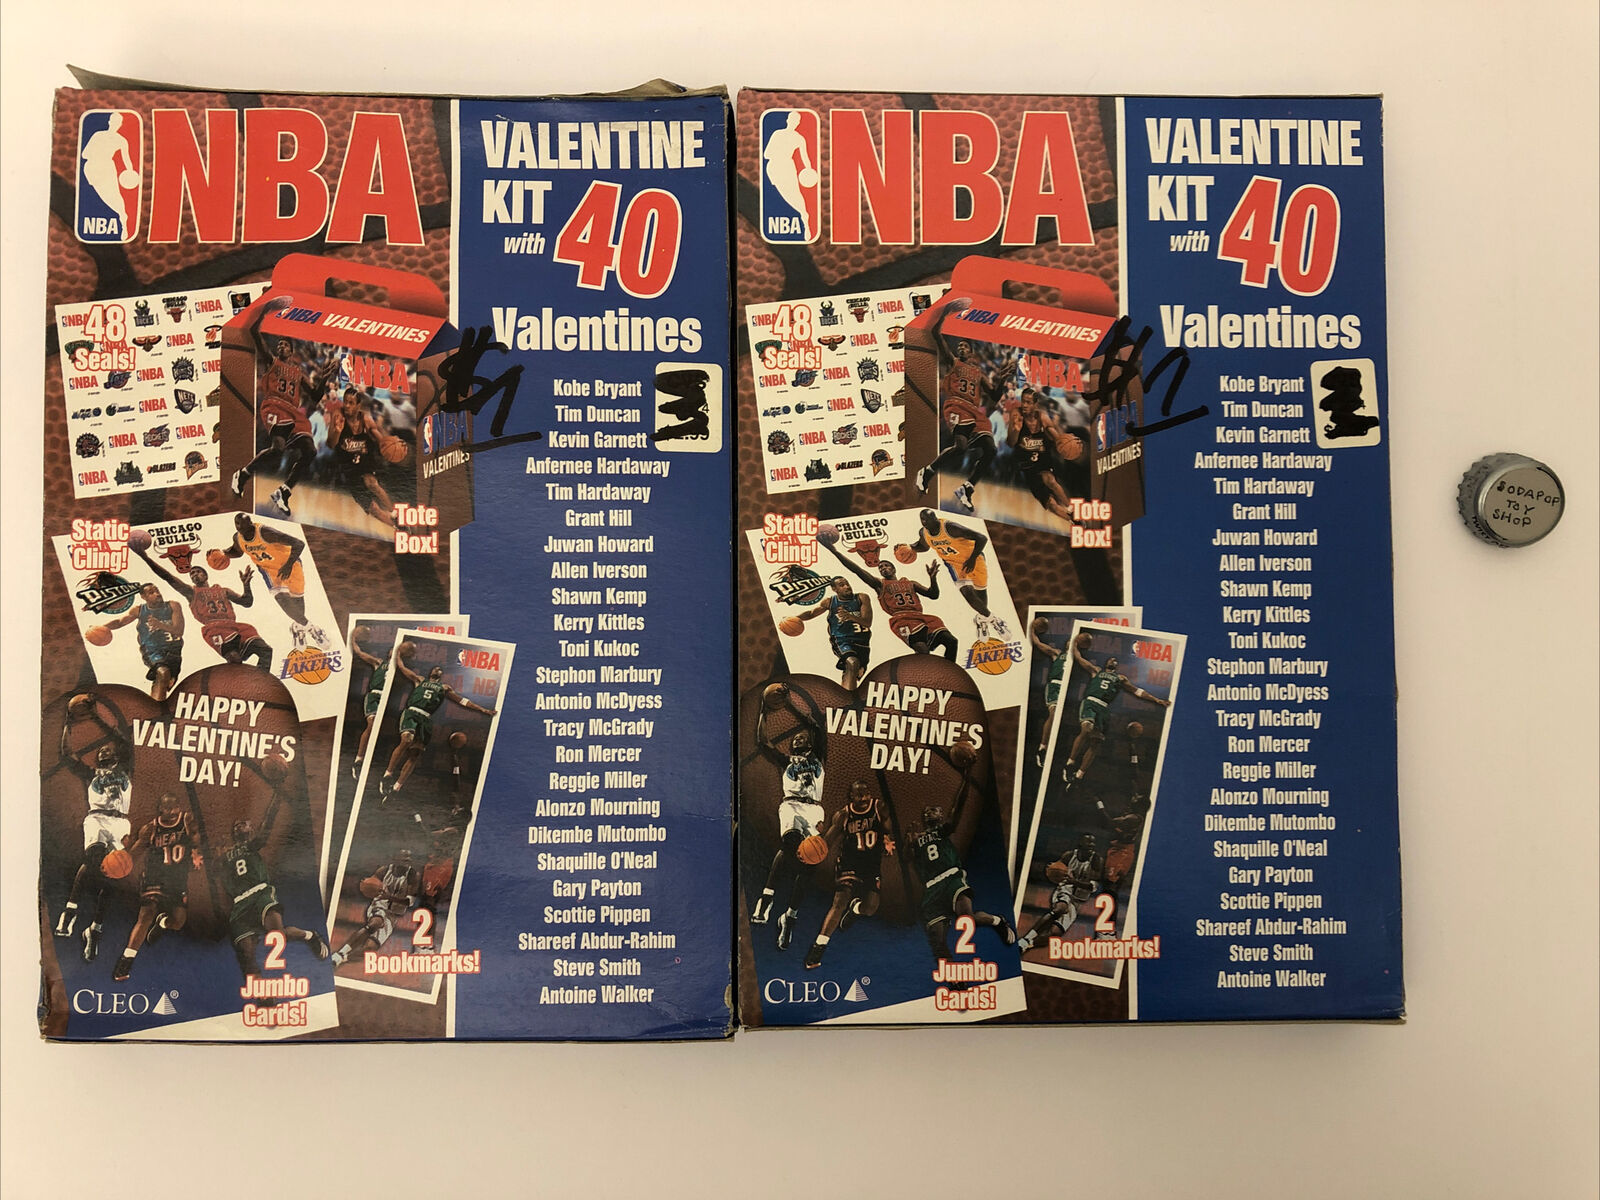 One Box of Cleo NBA Basketball Valentines Kit with 40 Cards Kobe Bryant 1999